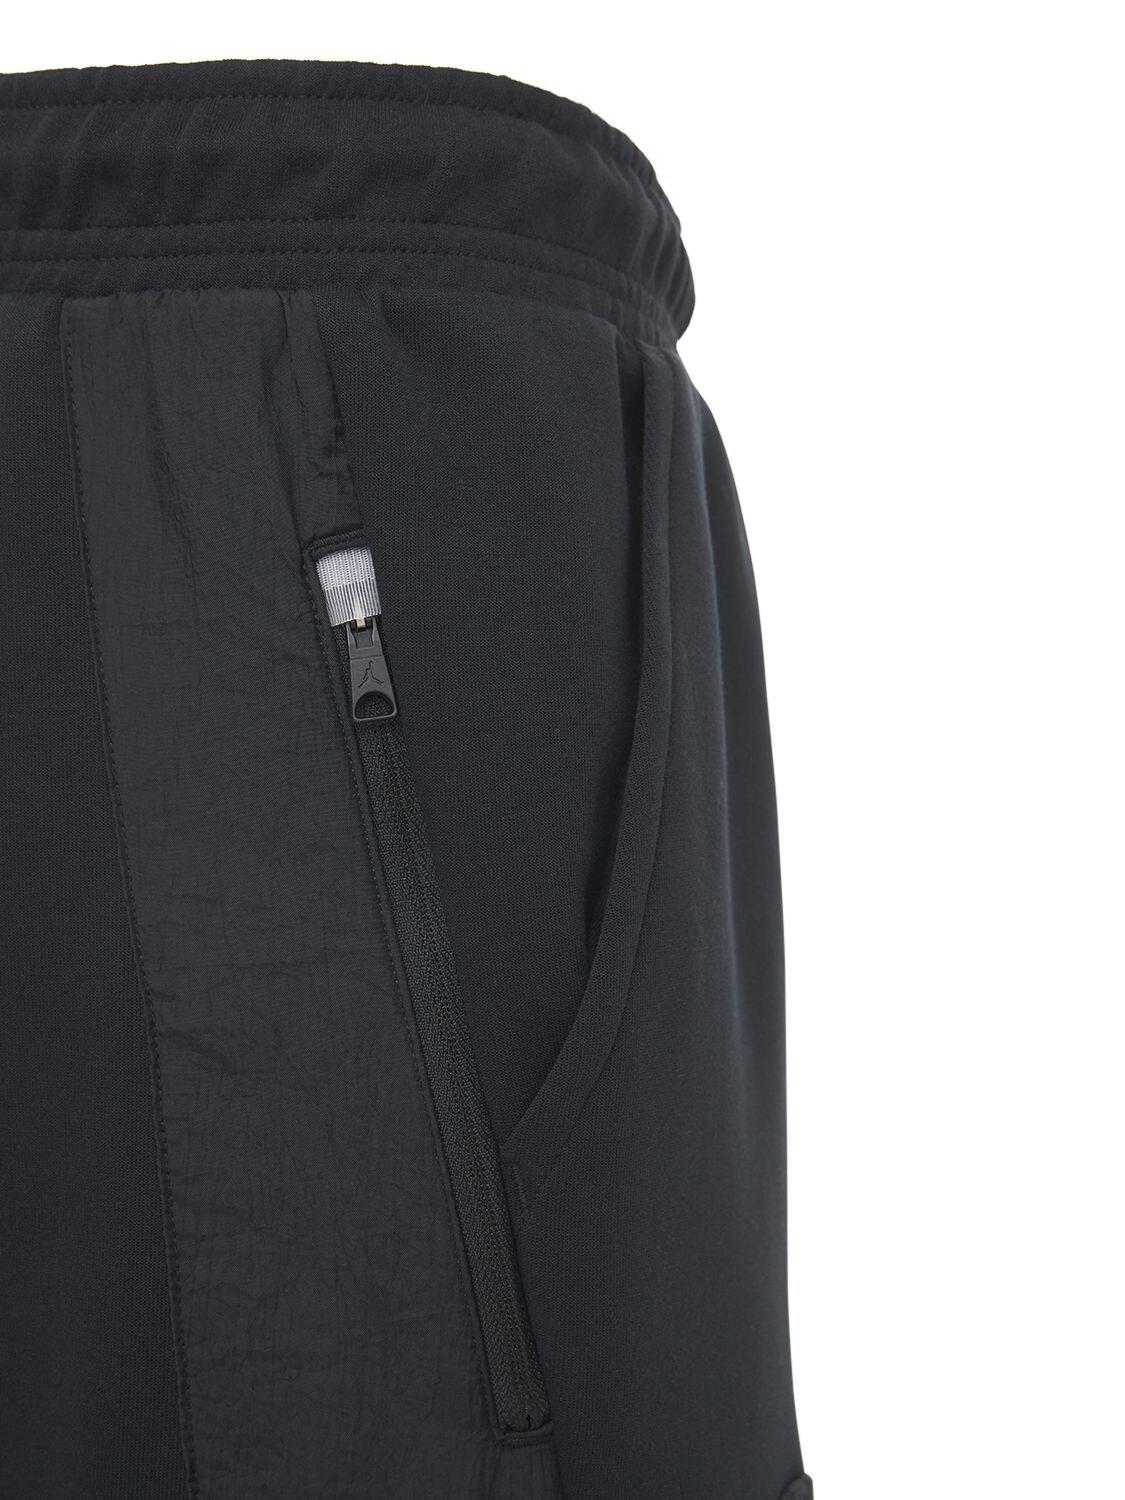 Nike Jordan Fleece Pants in Black for Men - Lyst